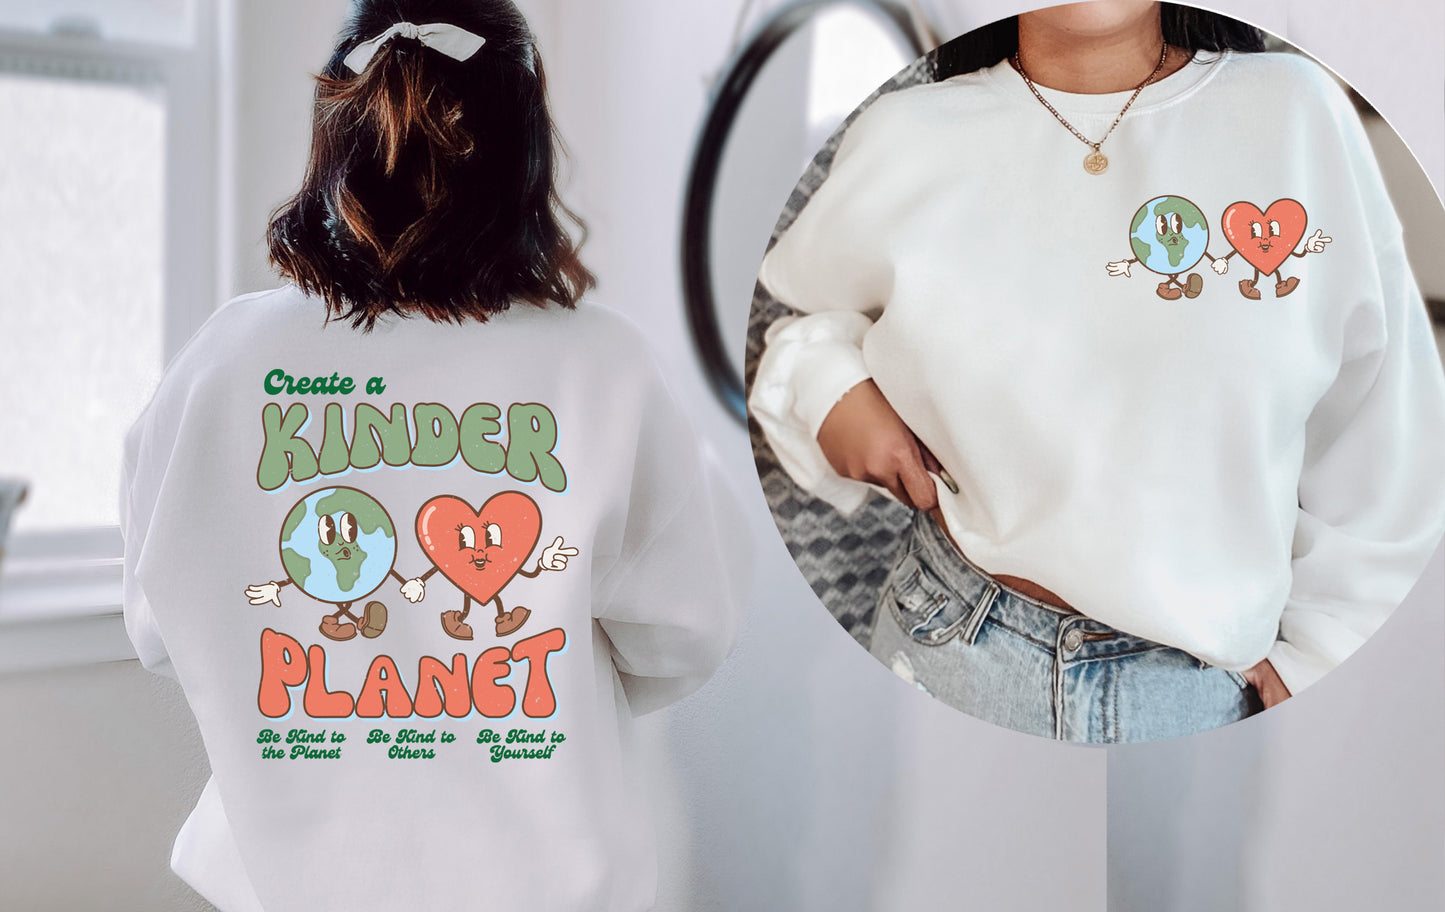 Kinder Planet Sweatshirt